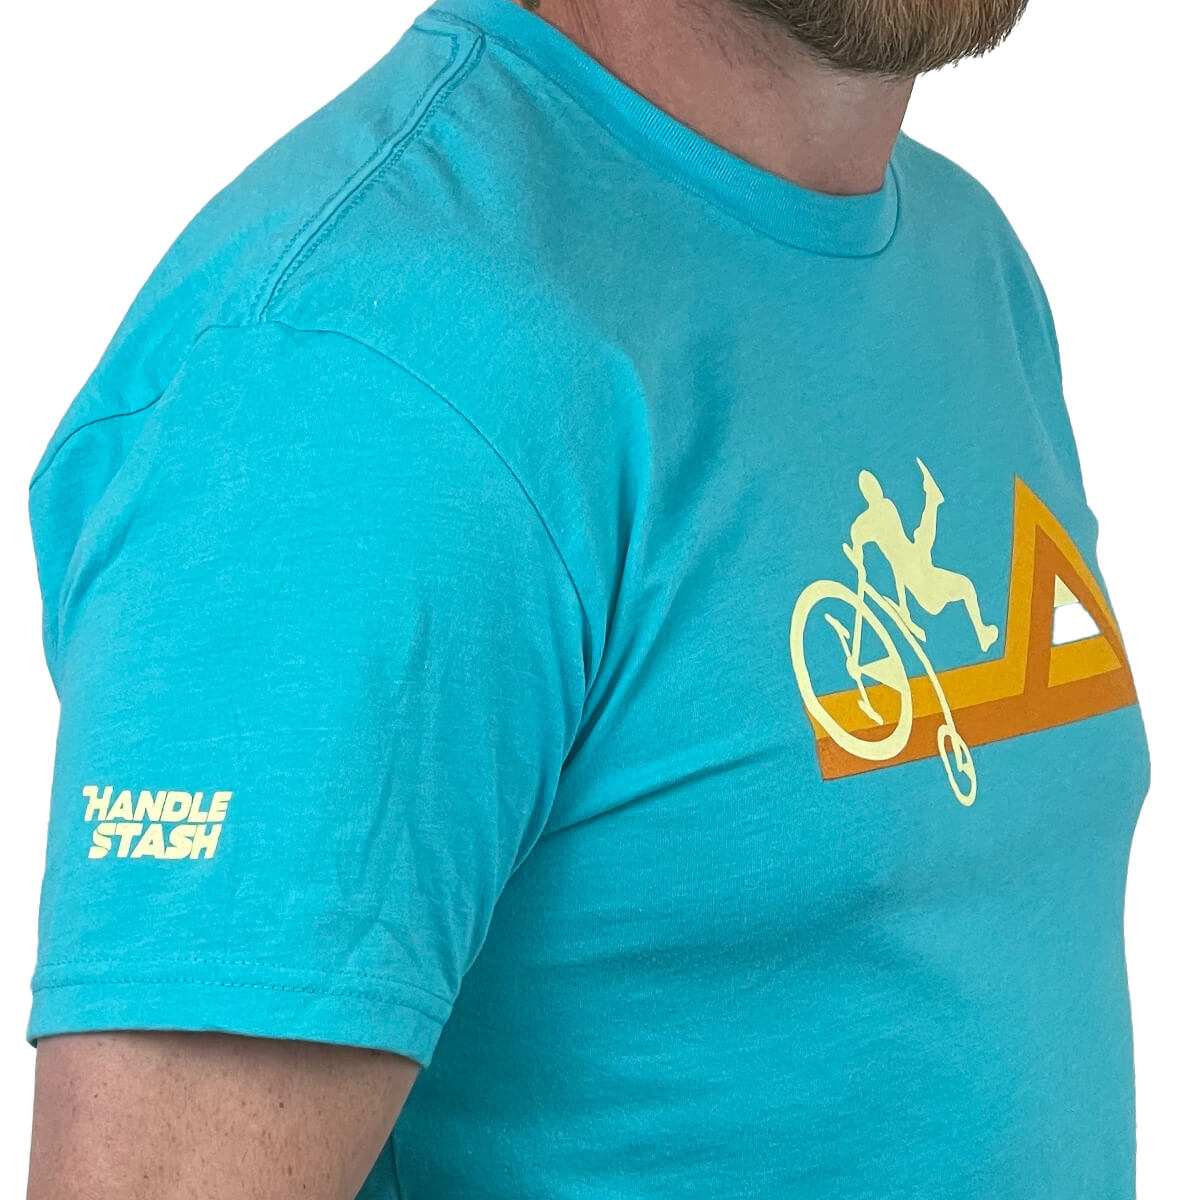 Mountain coast biking t shirt - zoomed in showing logo on sleeve. 